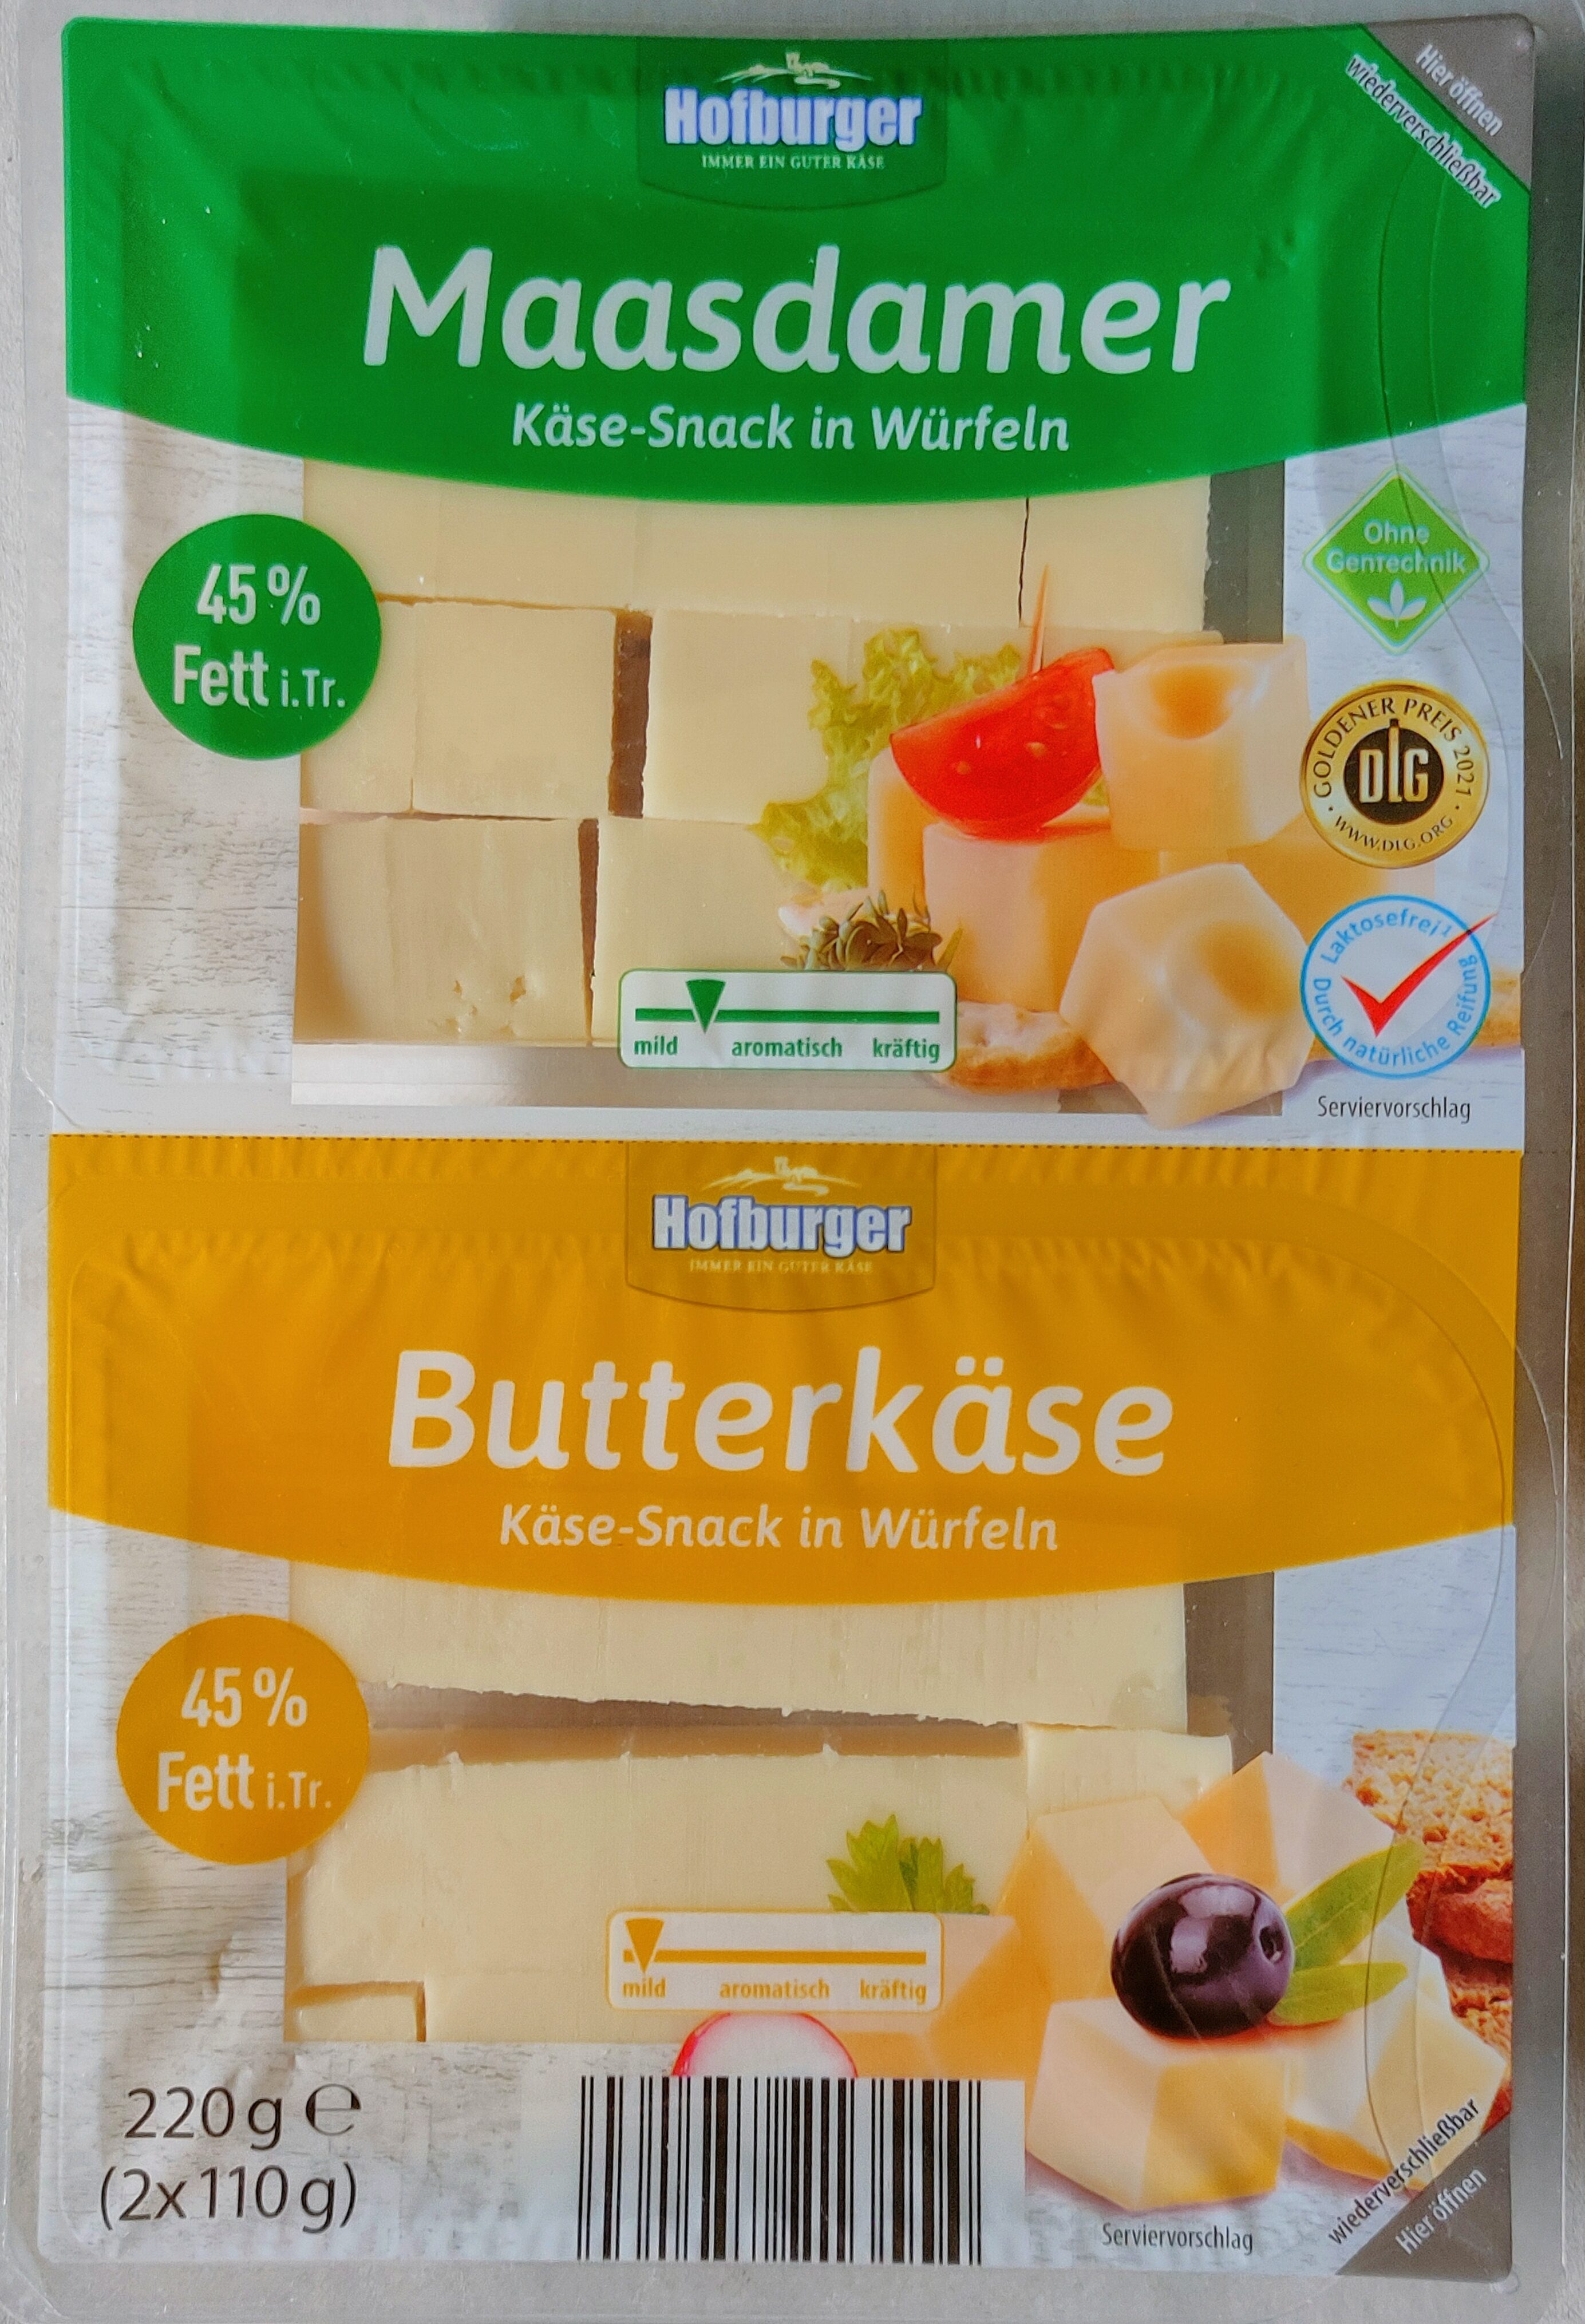 Käsesnack in Würfeln - Maasdamer & Butterkäse - Produkt